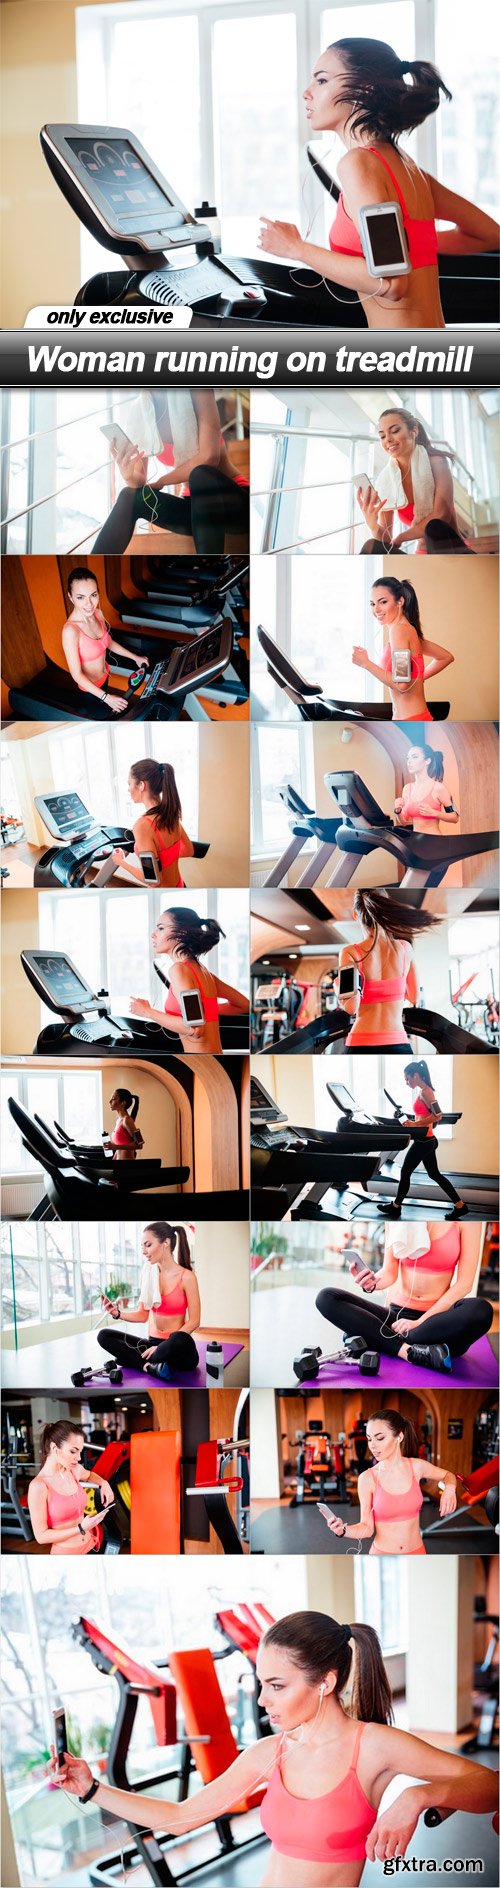 Woman running on treadmill - 15 UHQ JPEG